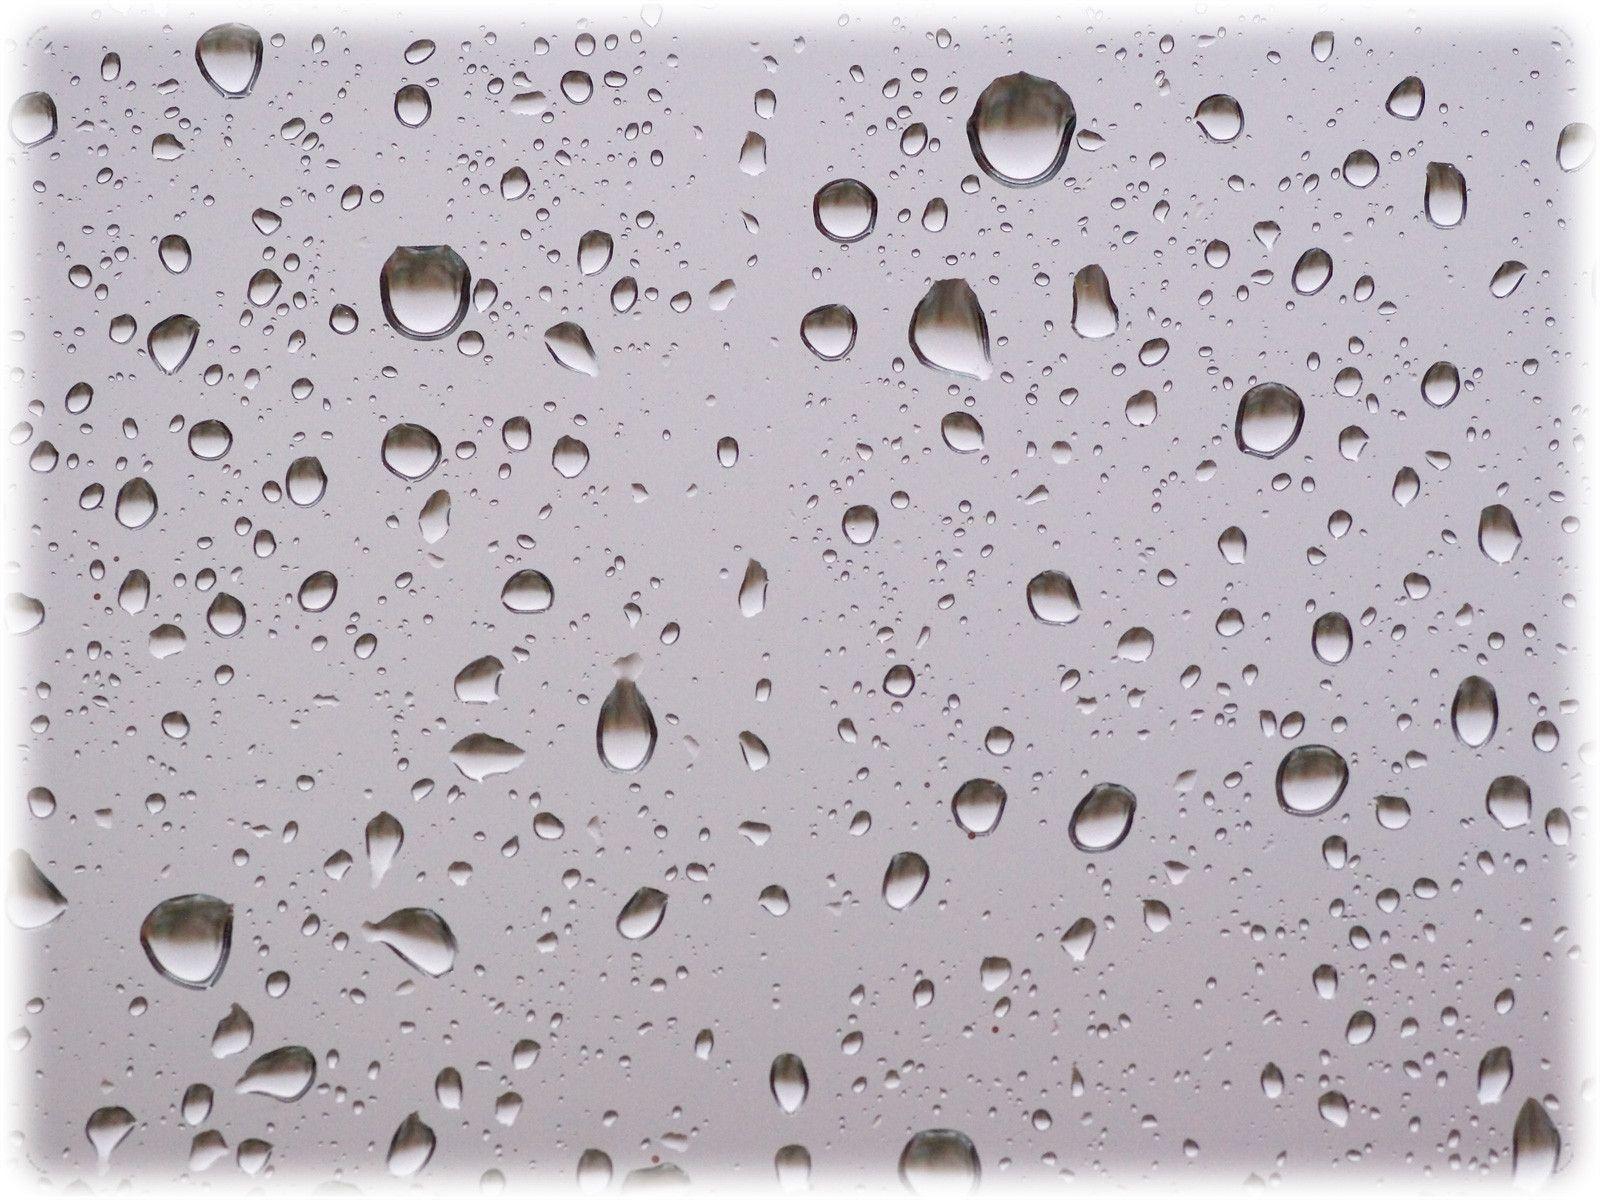 Raindrops Wallpaper Car Picture